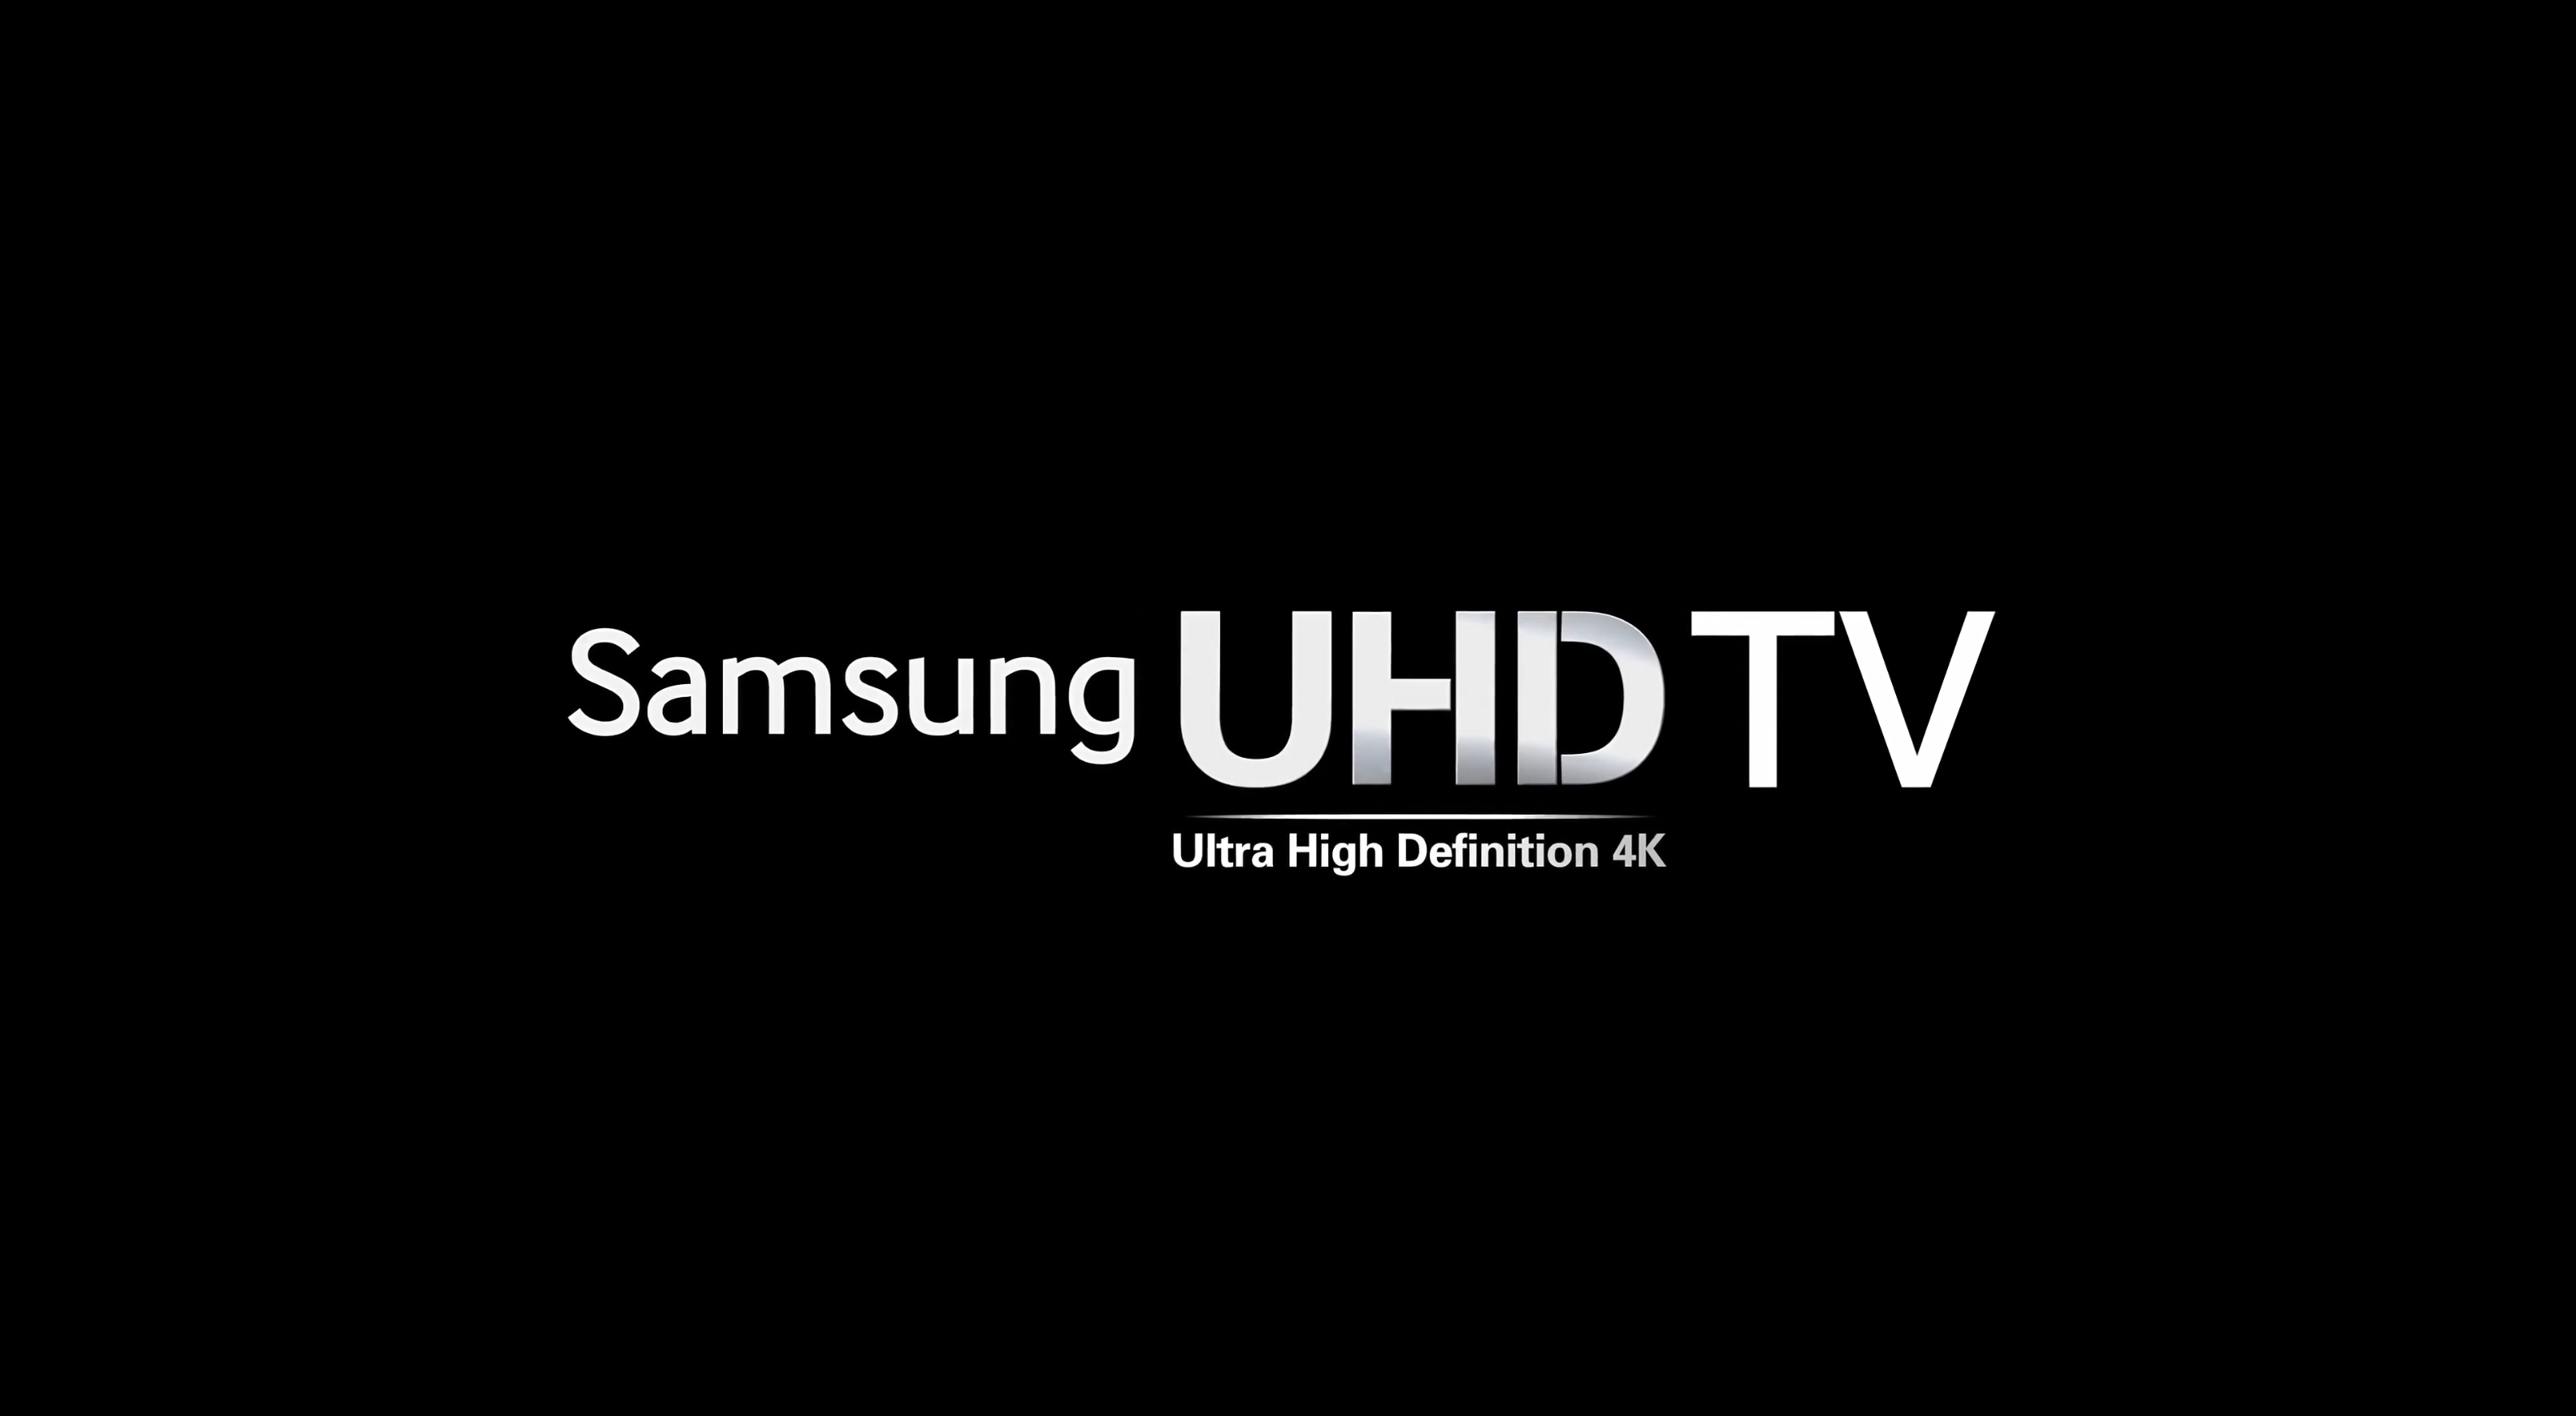 Samsung 三星UHD演示视频-自然风景篇 4K UHD Demo - Nature in 4K 280MB